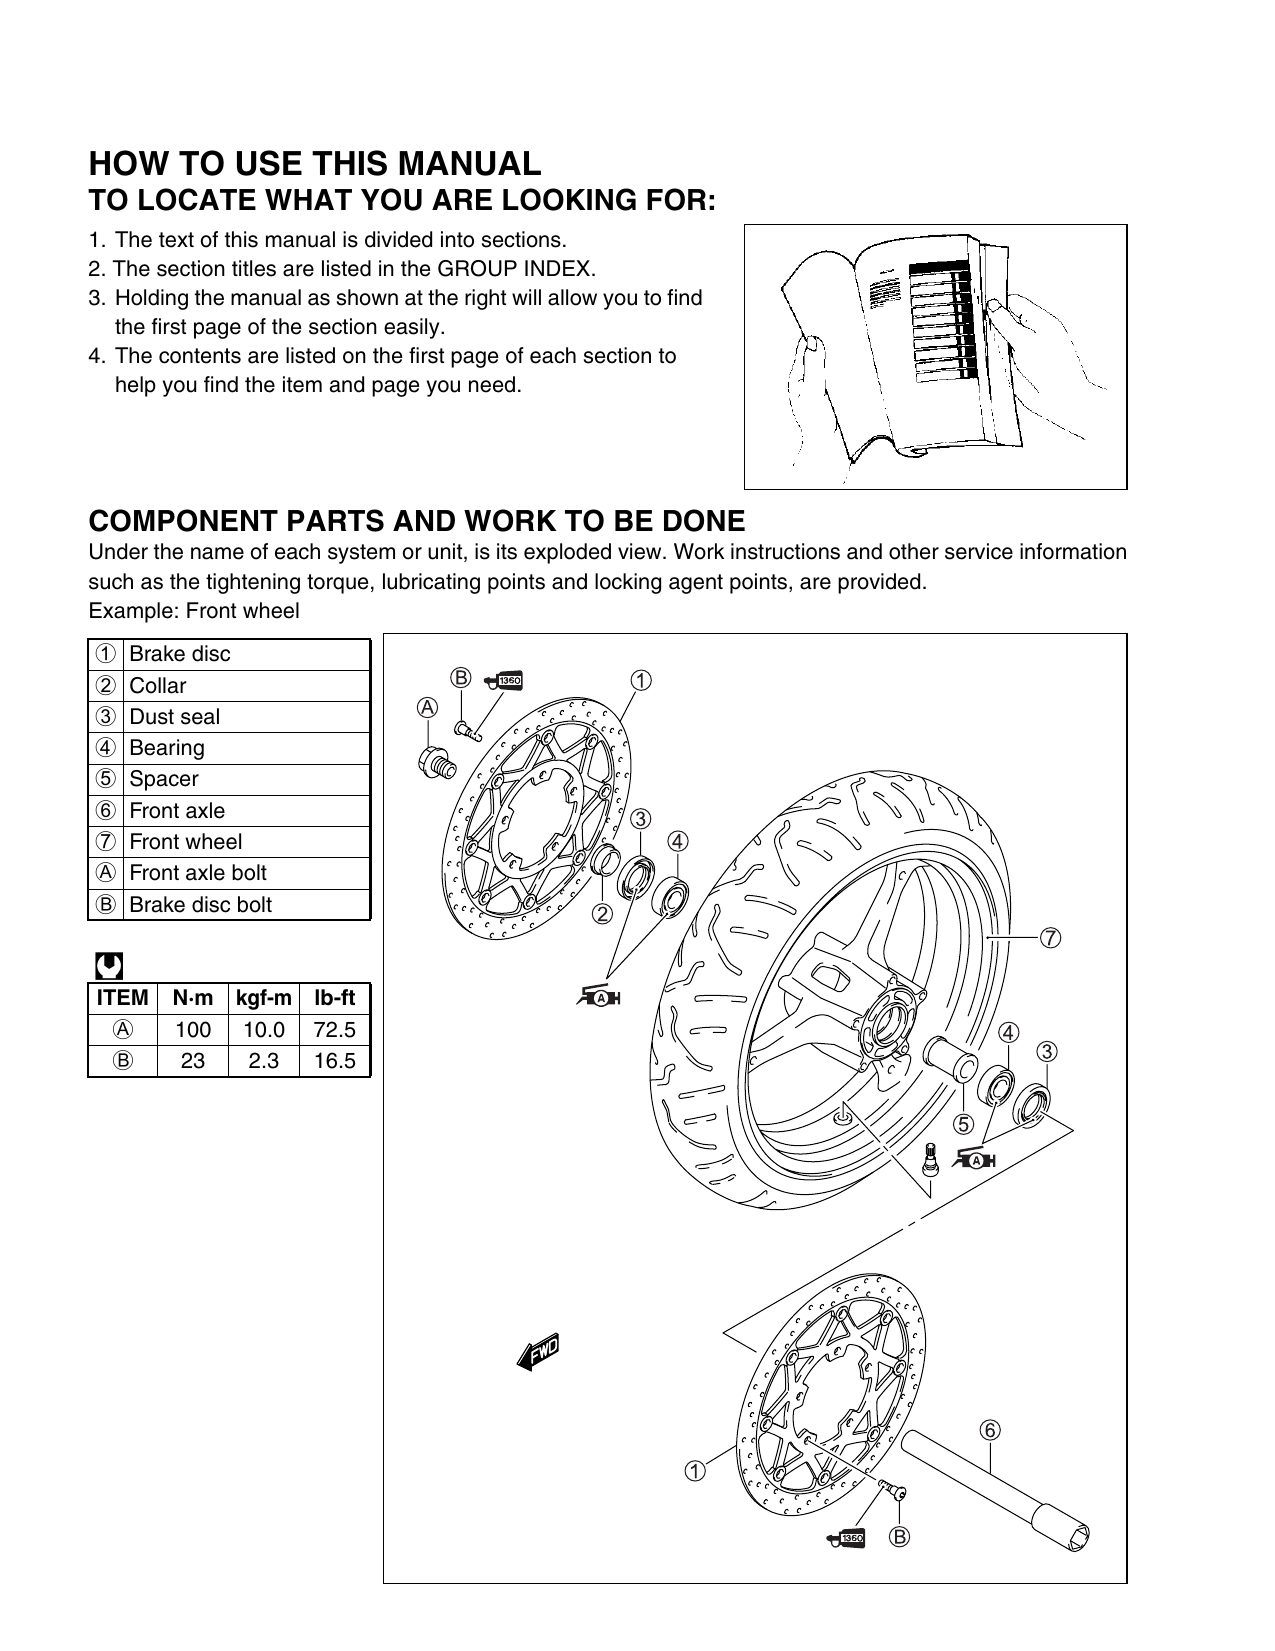 2005-2006 Suzuki GSX-R1000 repair manual Preview image 3